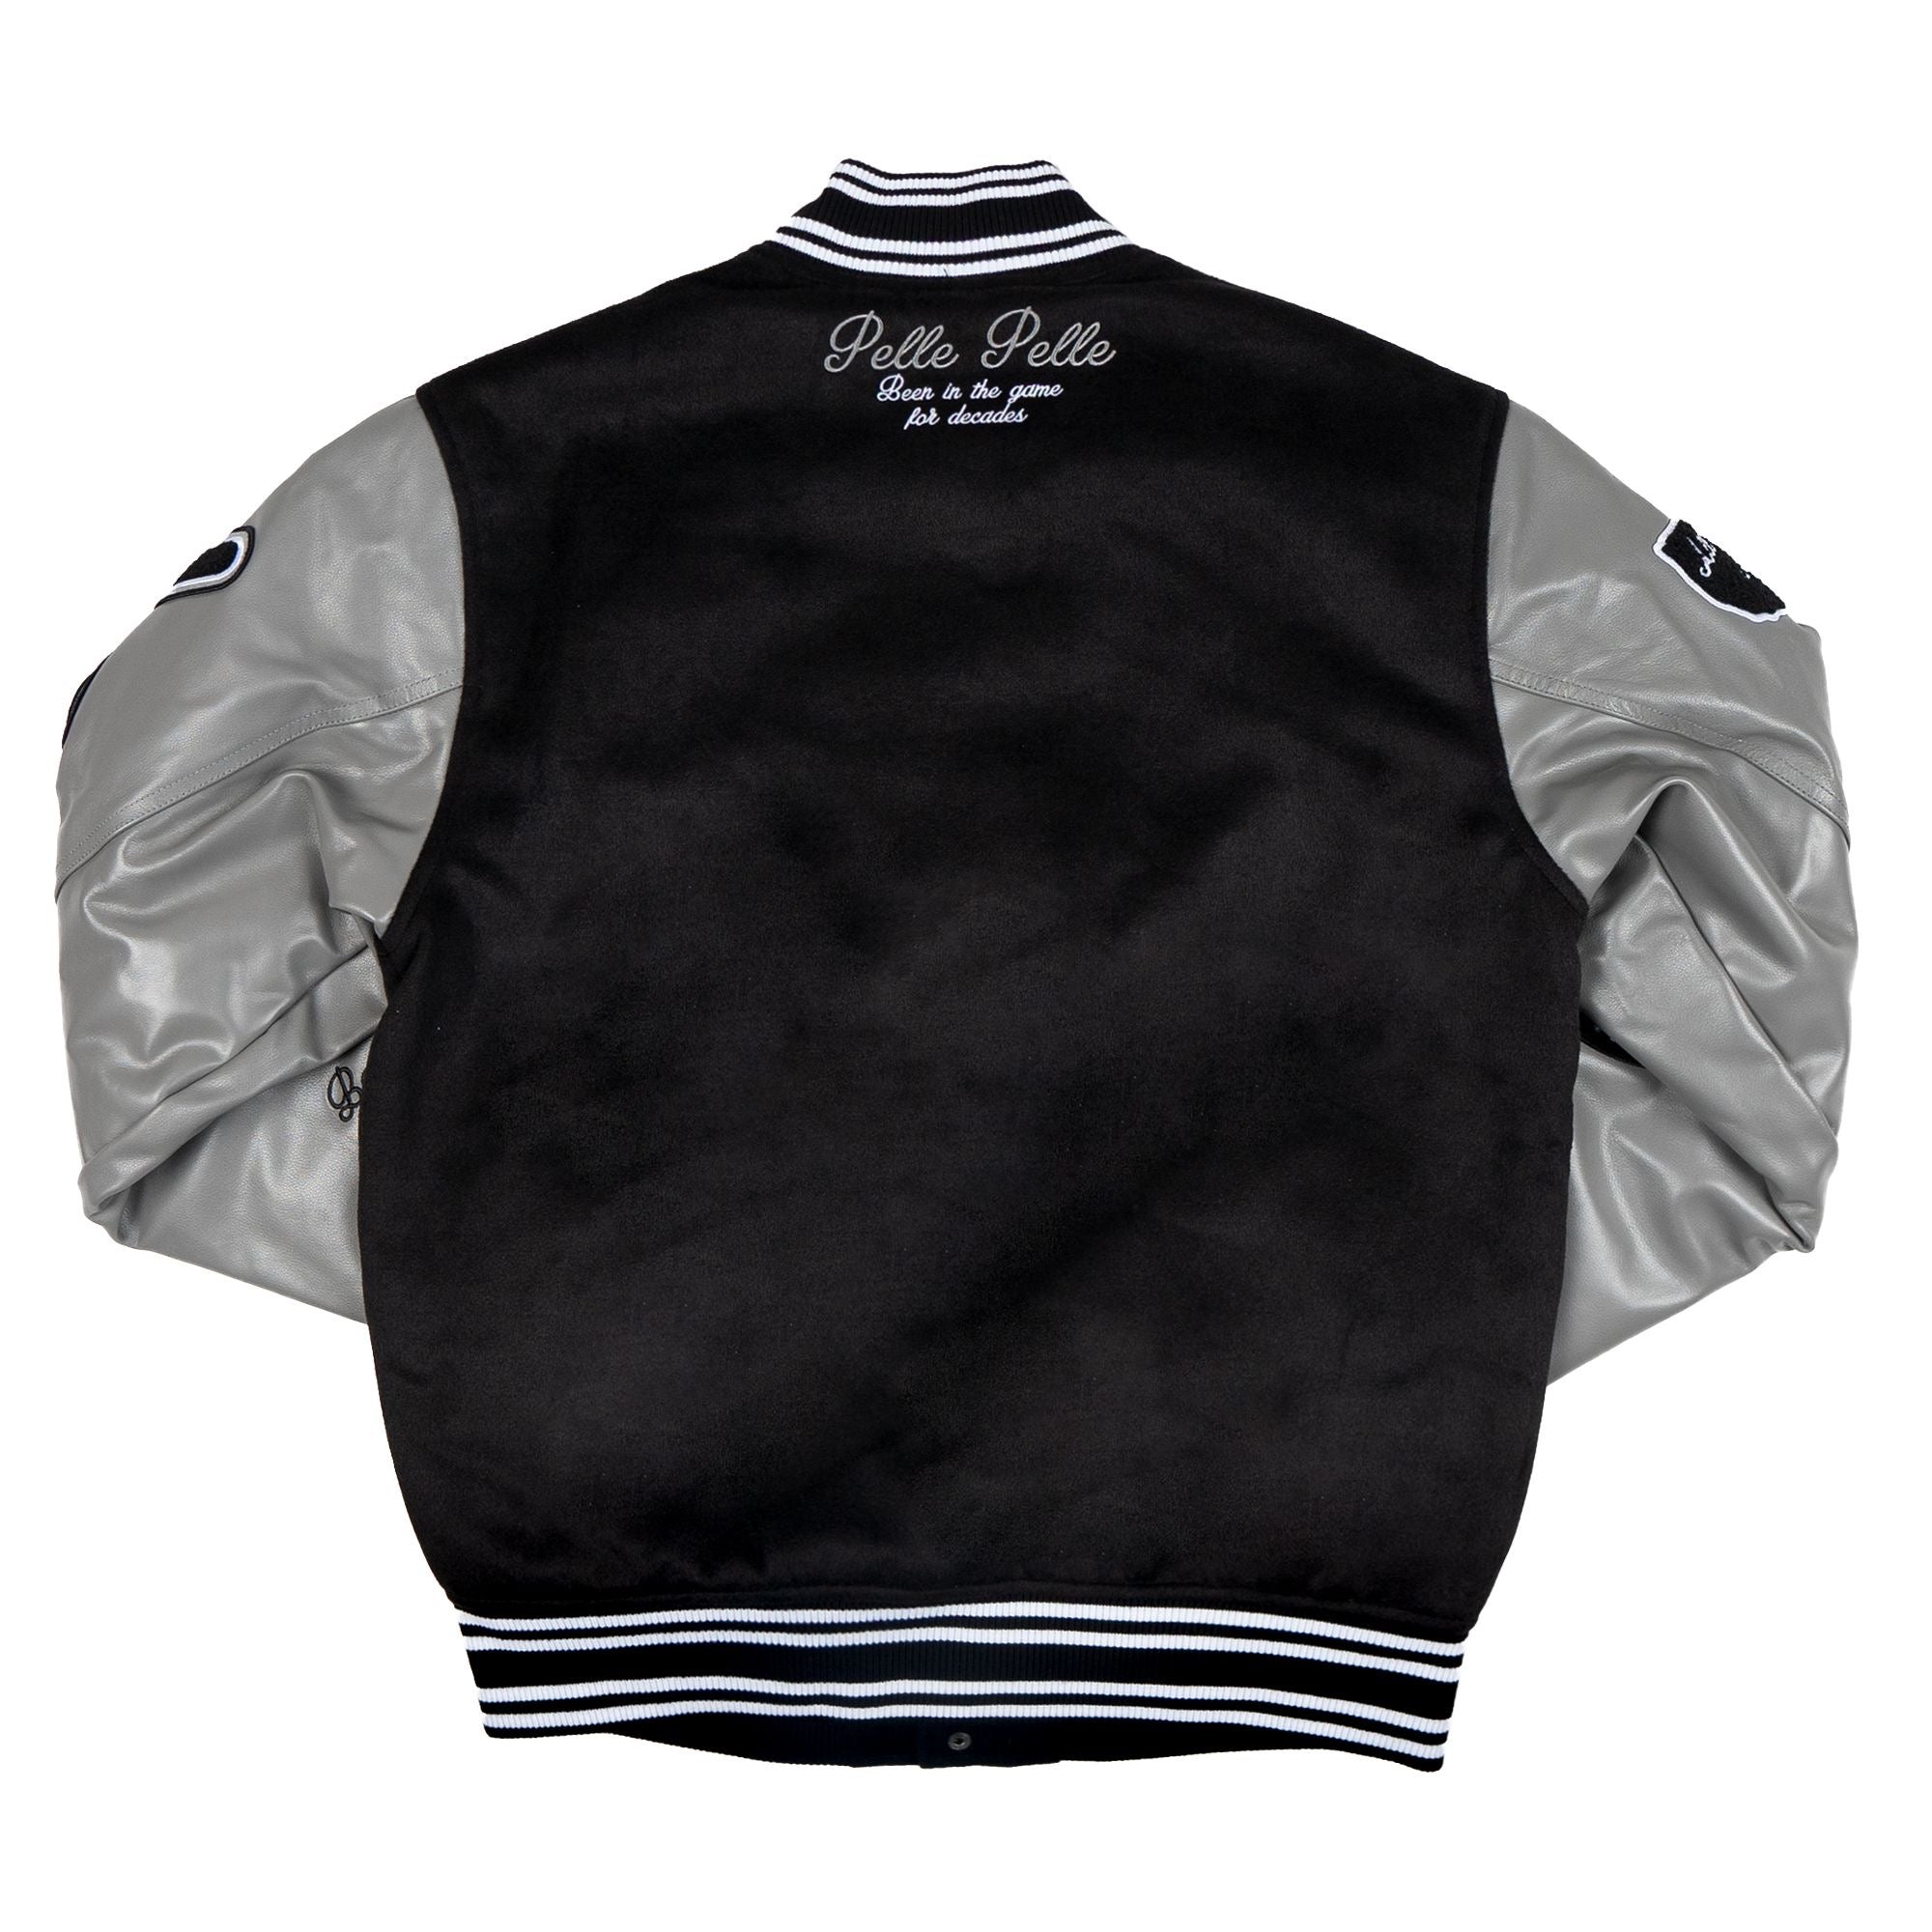 Pelle-Pelle-Black-World-Famous-Wool-and-Leather-Varsity-Jacket-.jpg